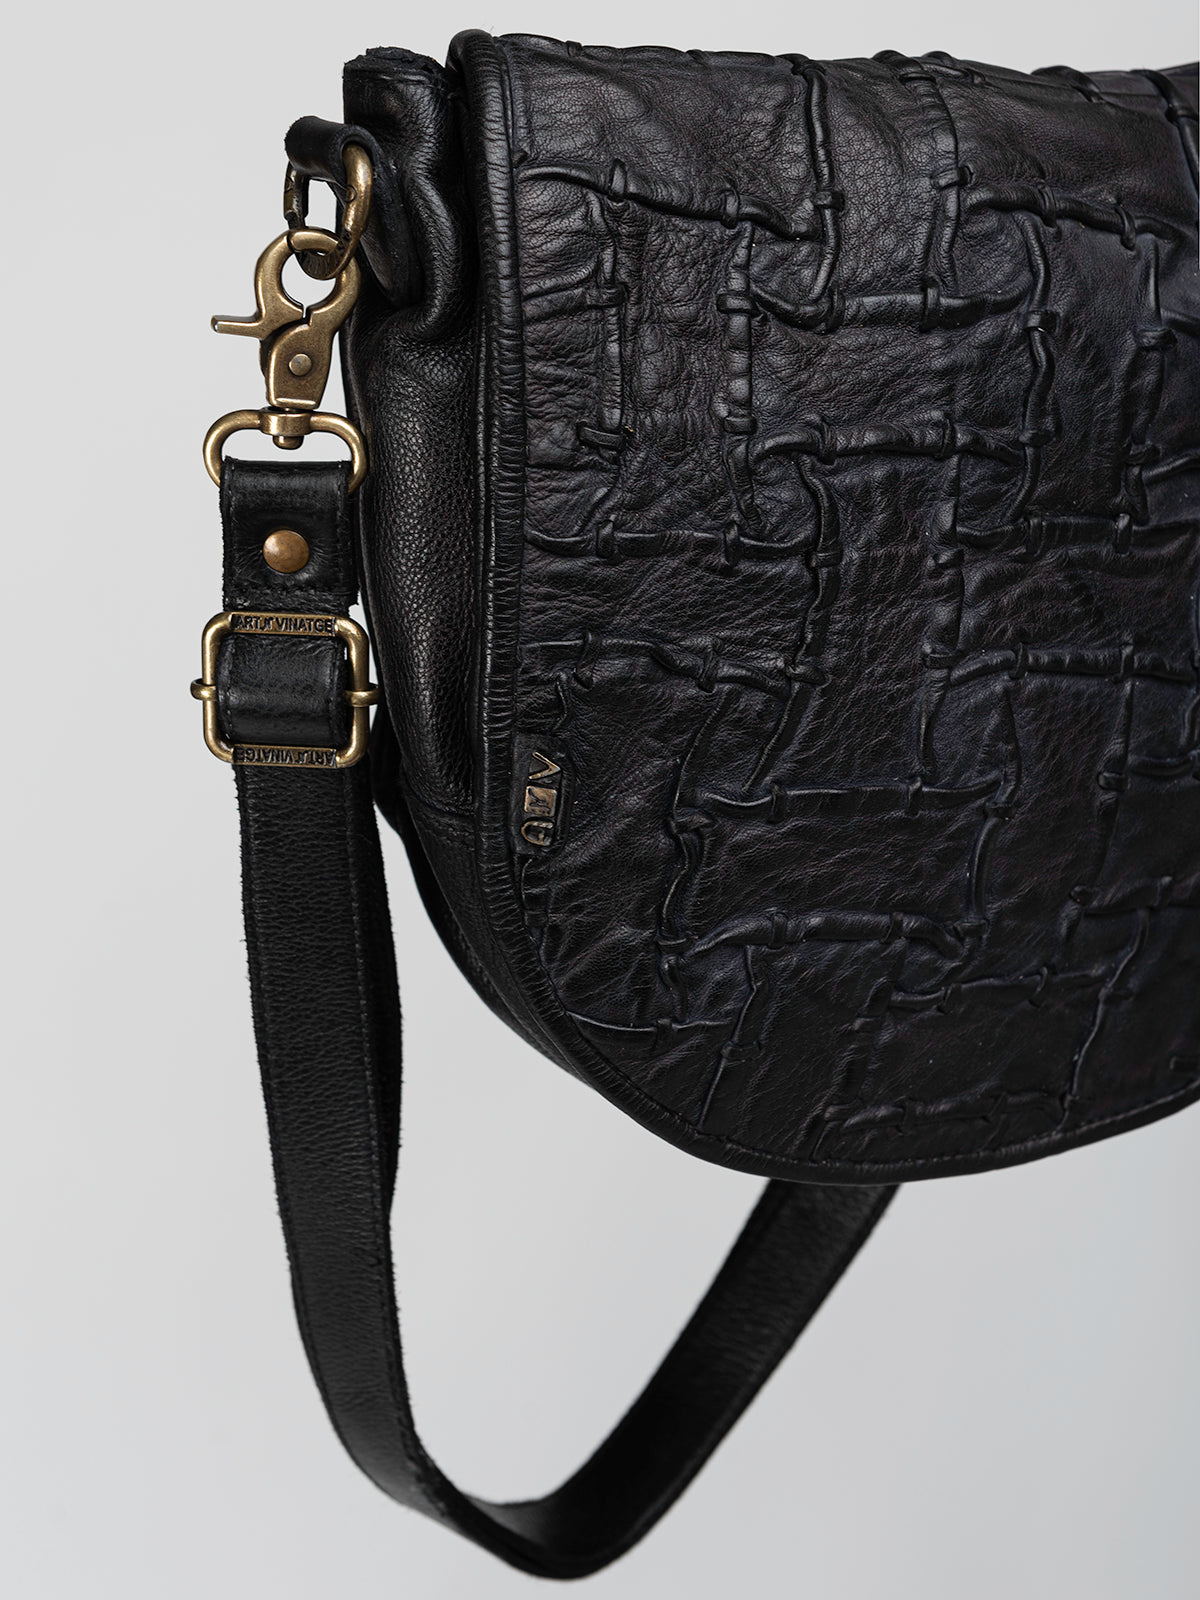 CARLA: Black leather crossbody bag by Art N Vintage